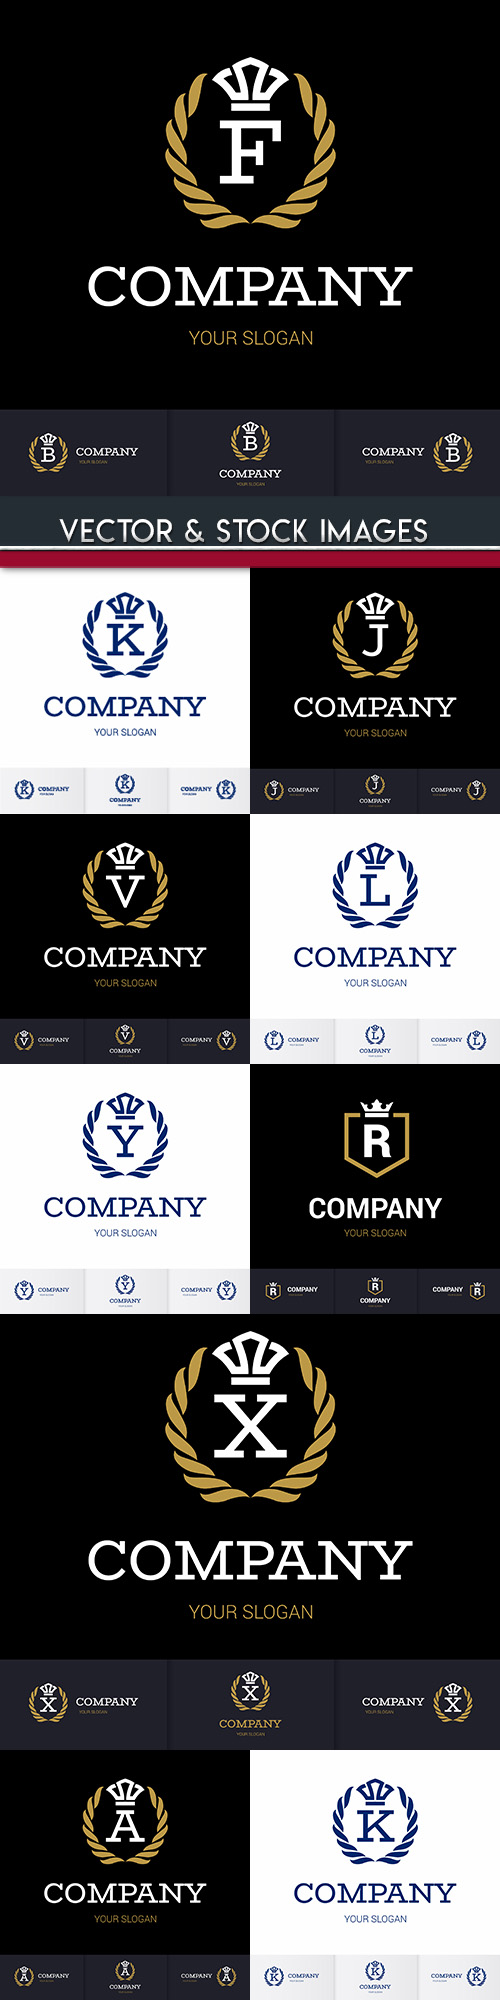 Creative logos corporate company design 30